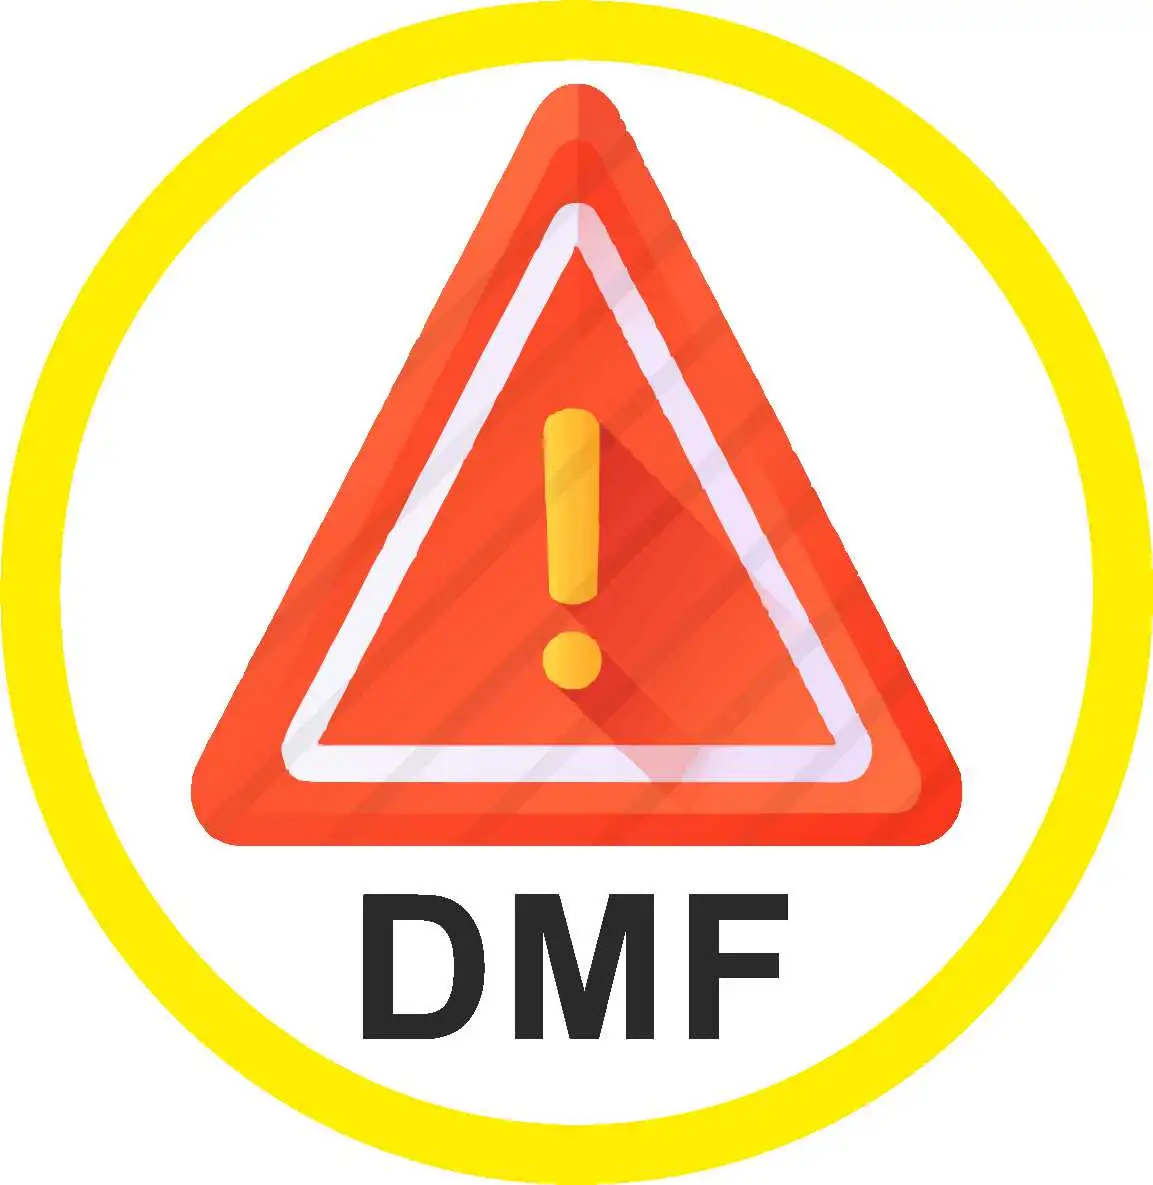 Complete abolishing the usage of Dimethylformamide (DMF) 